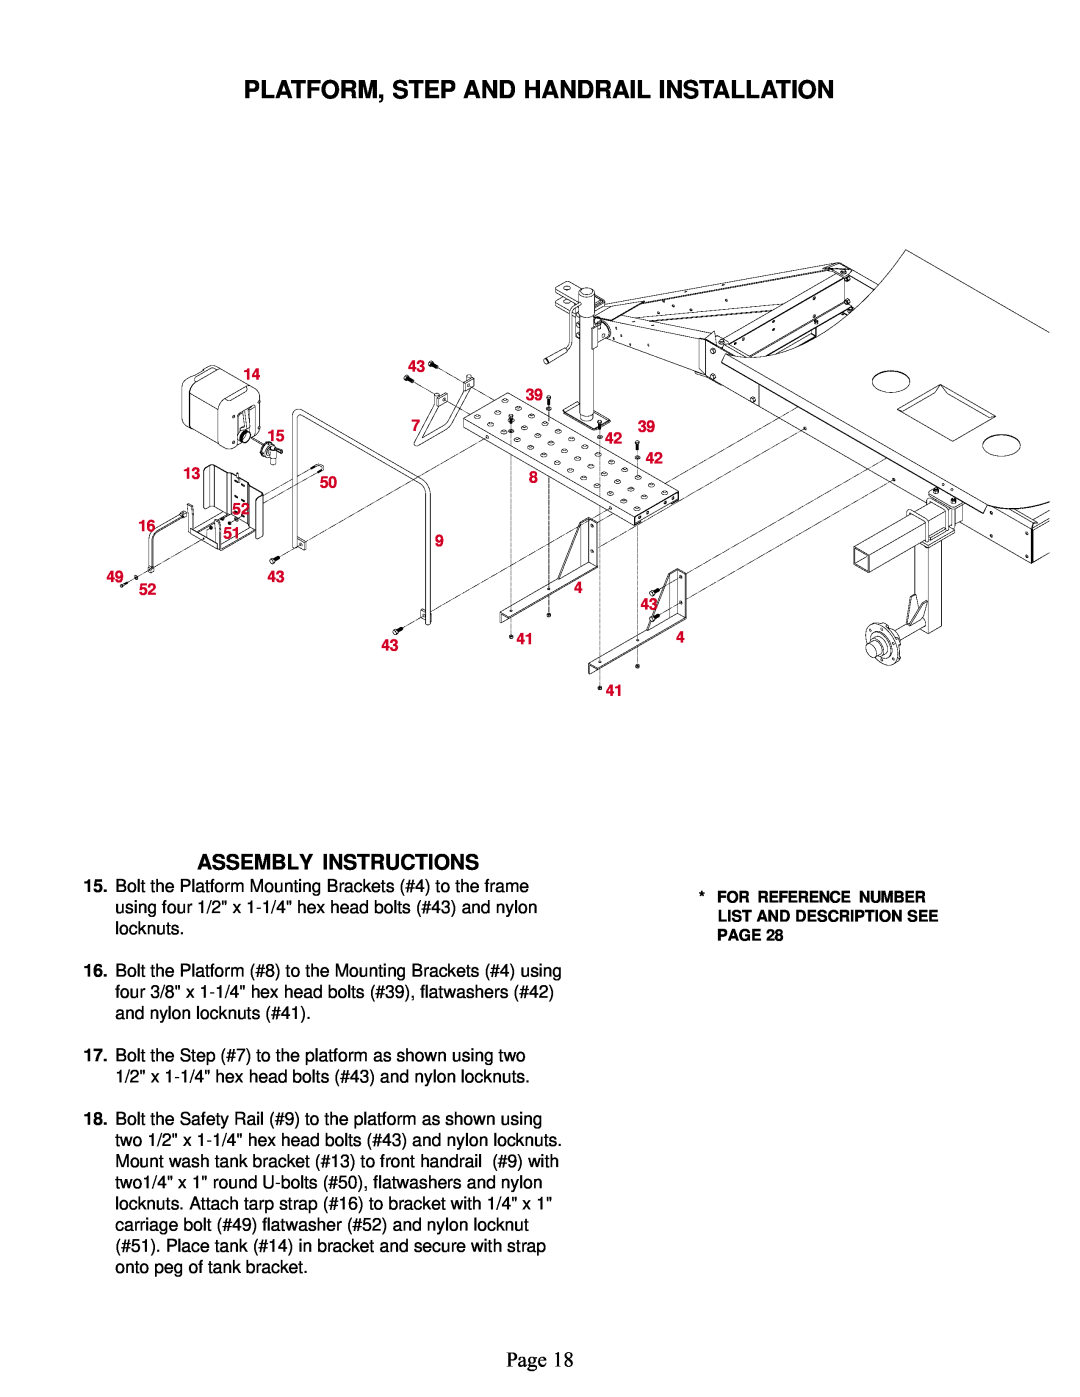 Demco Sprayer manual Platform, Step And Handrail Installation, Page 